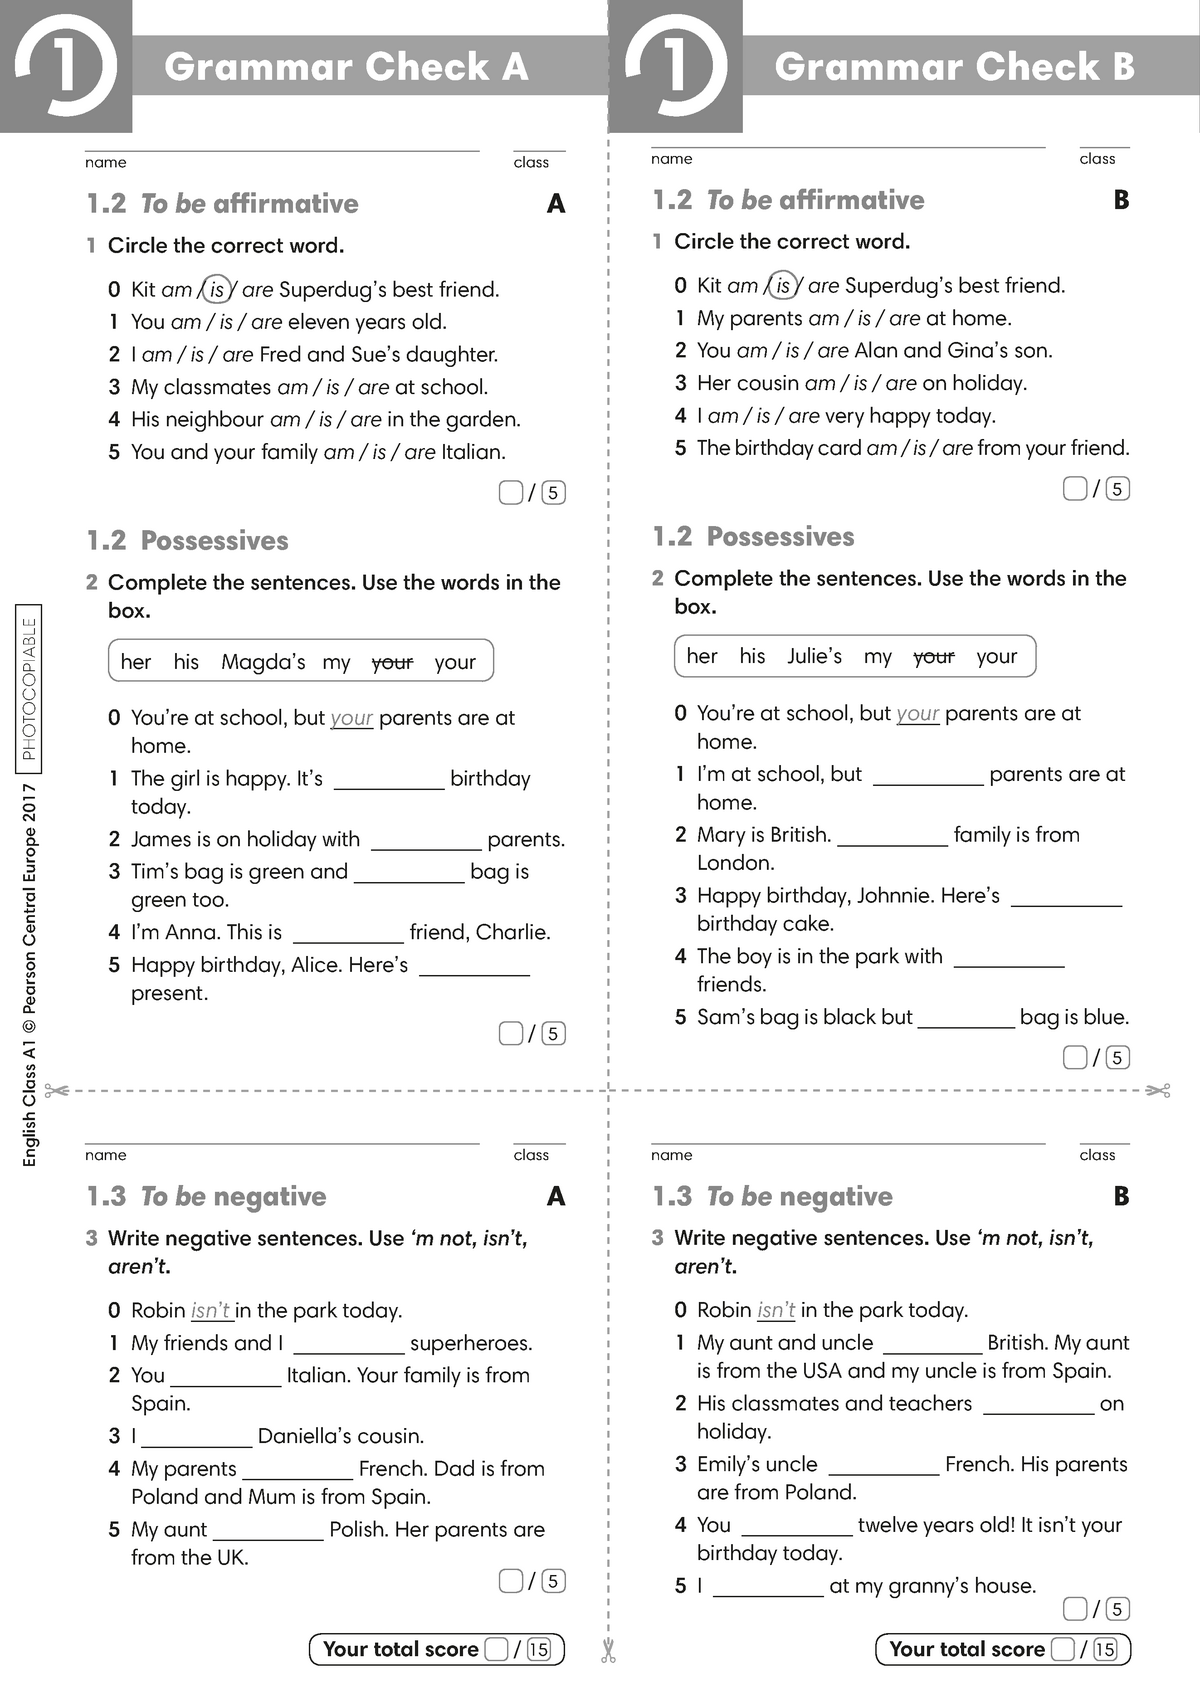 English Class A1+ Unit 4 Test 03. ECA1 Tests Grammar check 1 AB - Applied linguistics - UniWarszawski